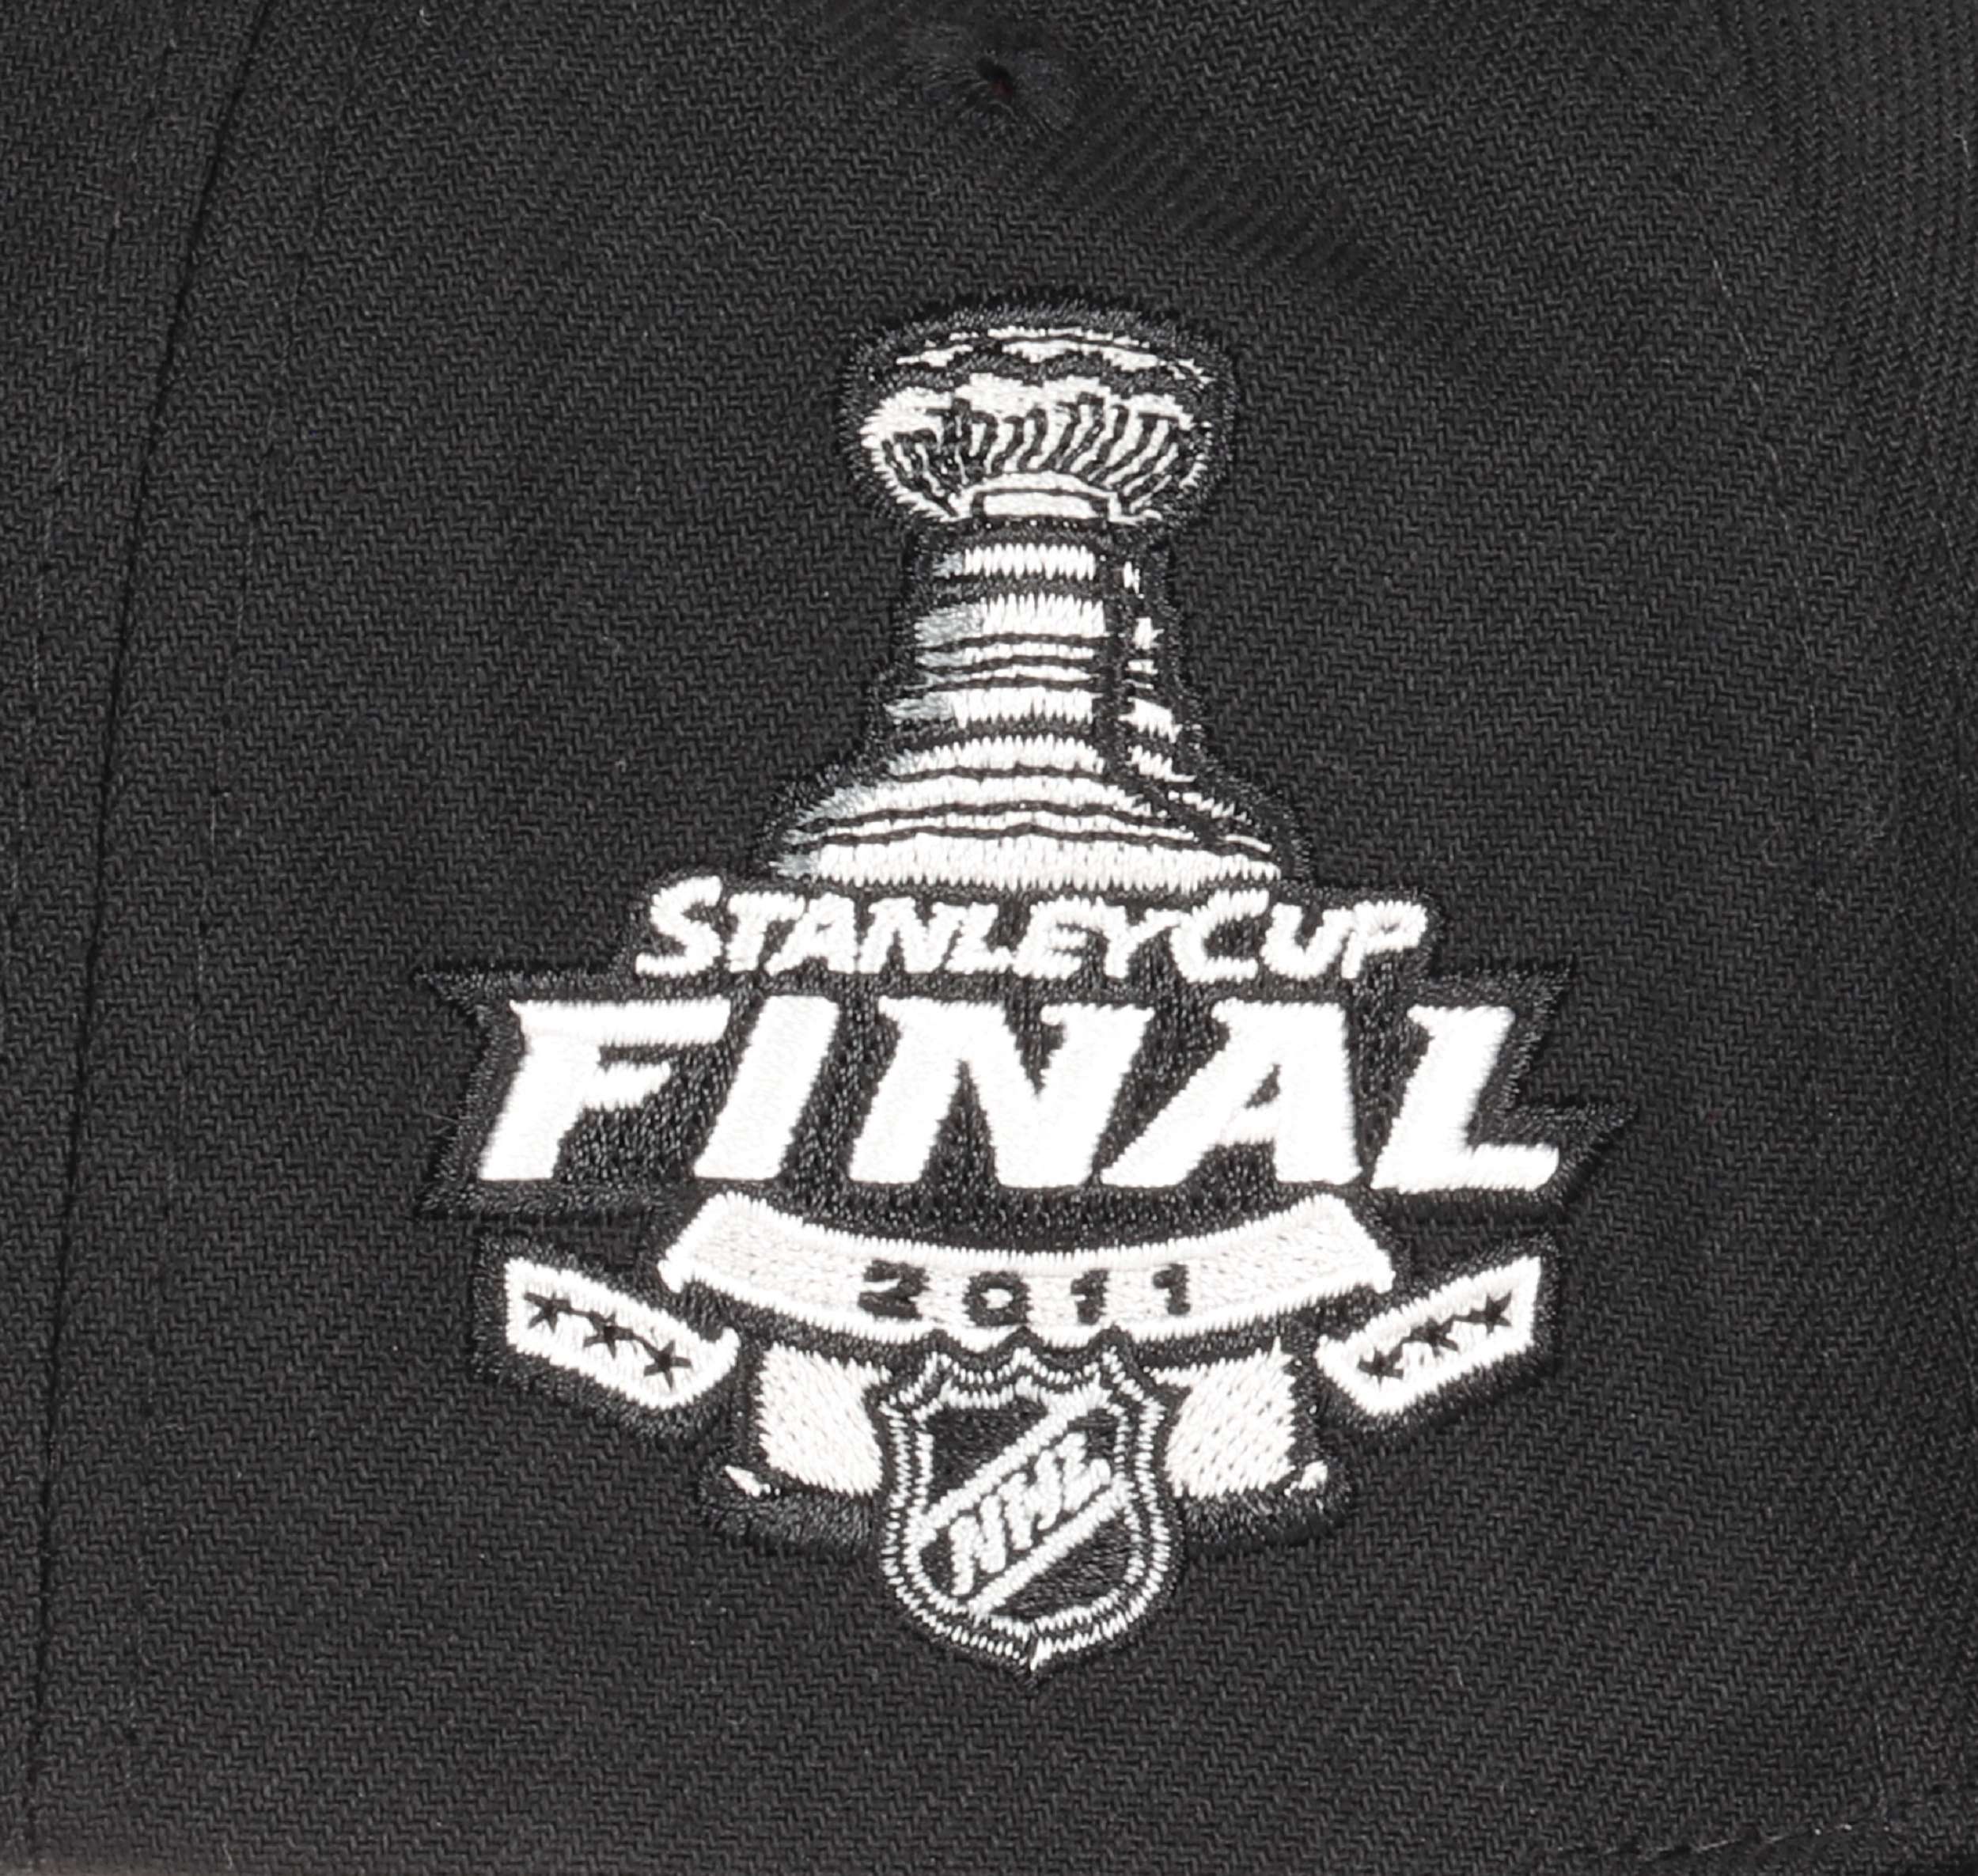 Boston Bruins NHL Top Spot Original Fit Black Adjustable Snapback Cap Mitchell & Ness